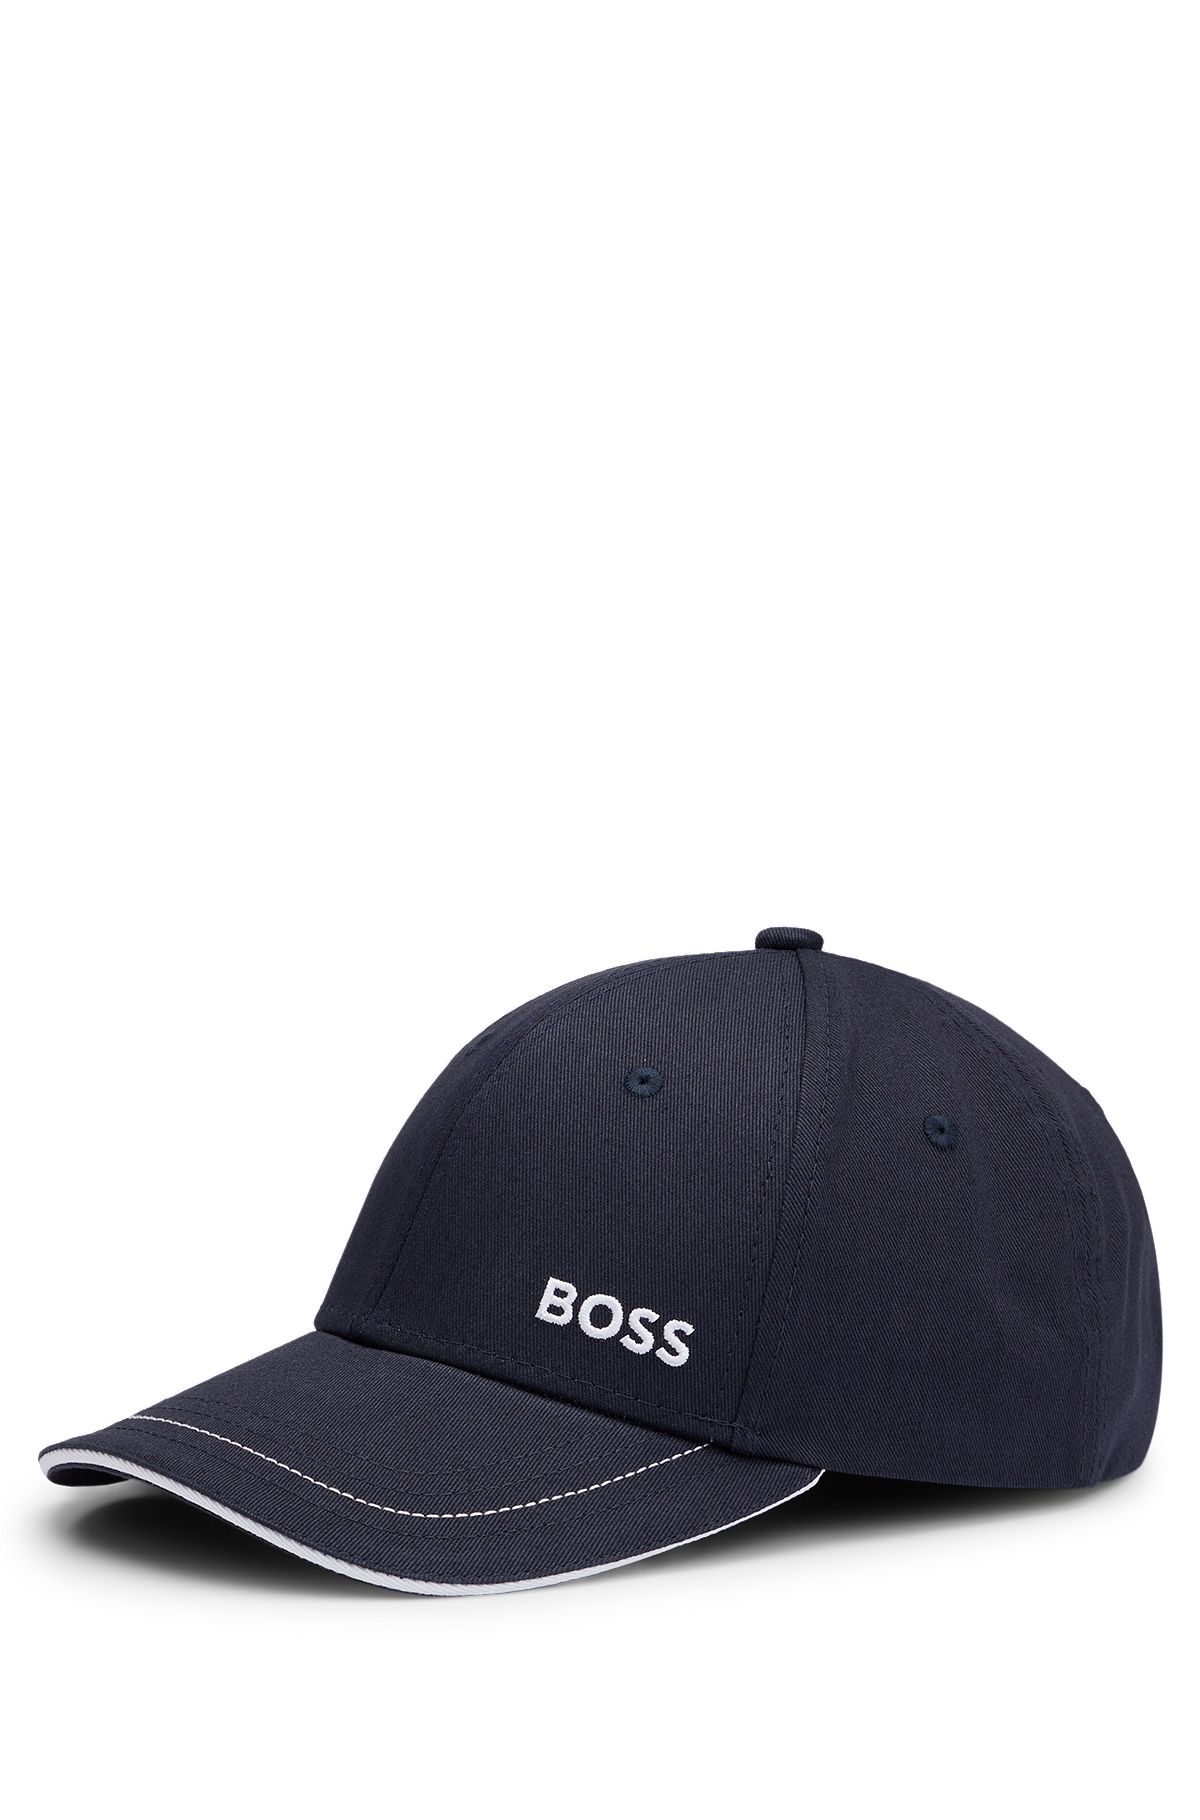 Boss Men's Classic Baseball Cap, Black Coal, One Size